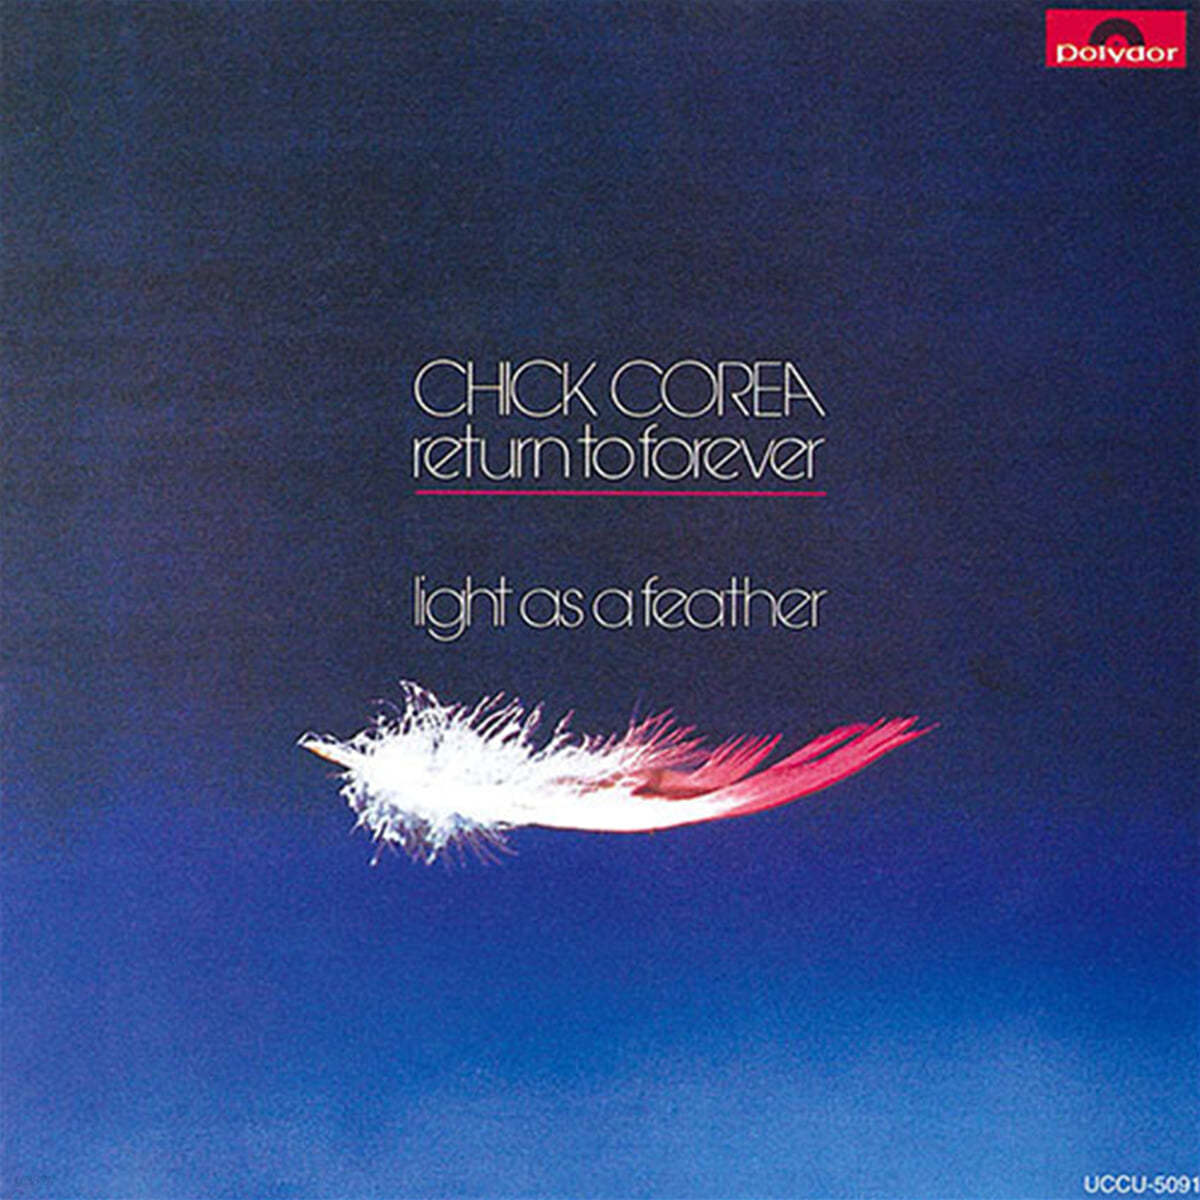 Chick Corea & Return to Forever (칙 코리아 & 리턴 투 포에버) - Light As A Feather